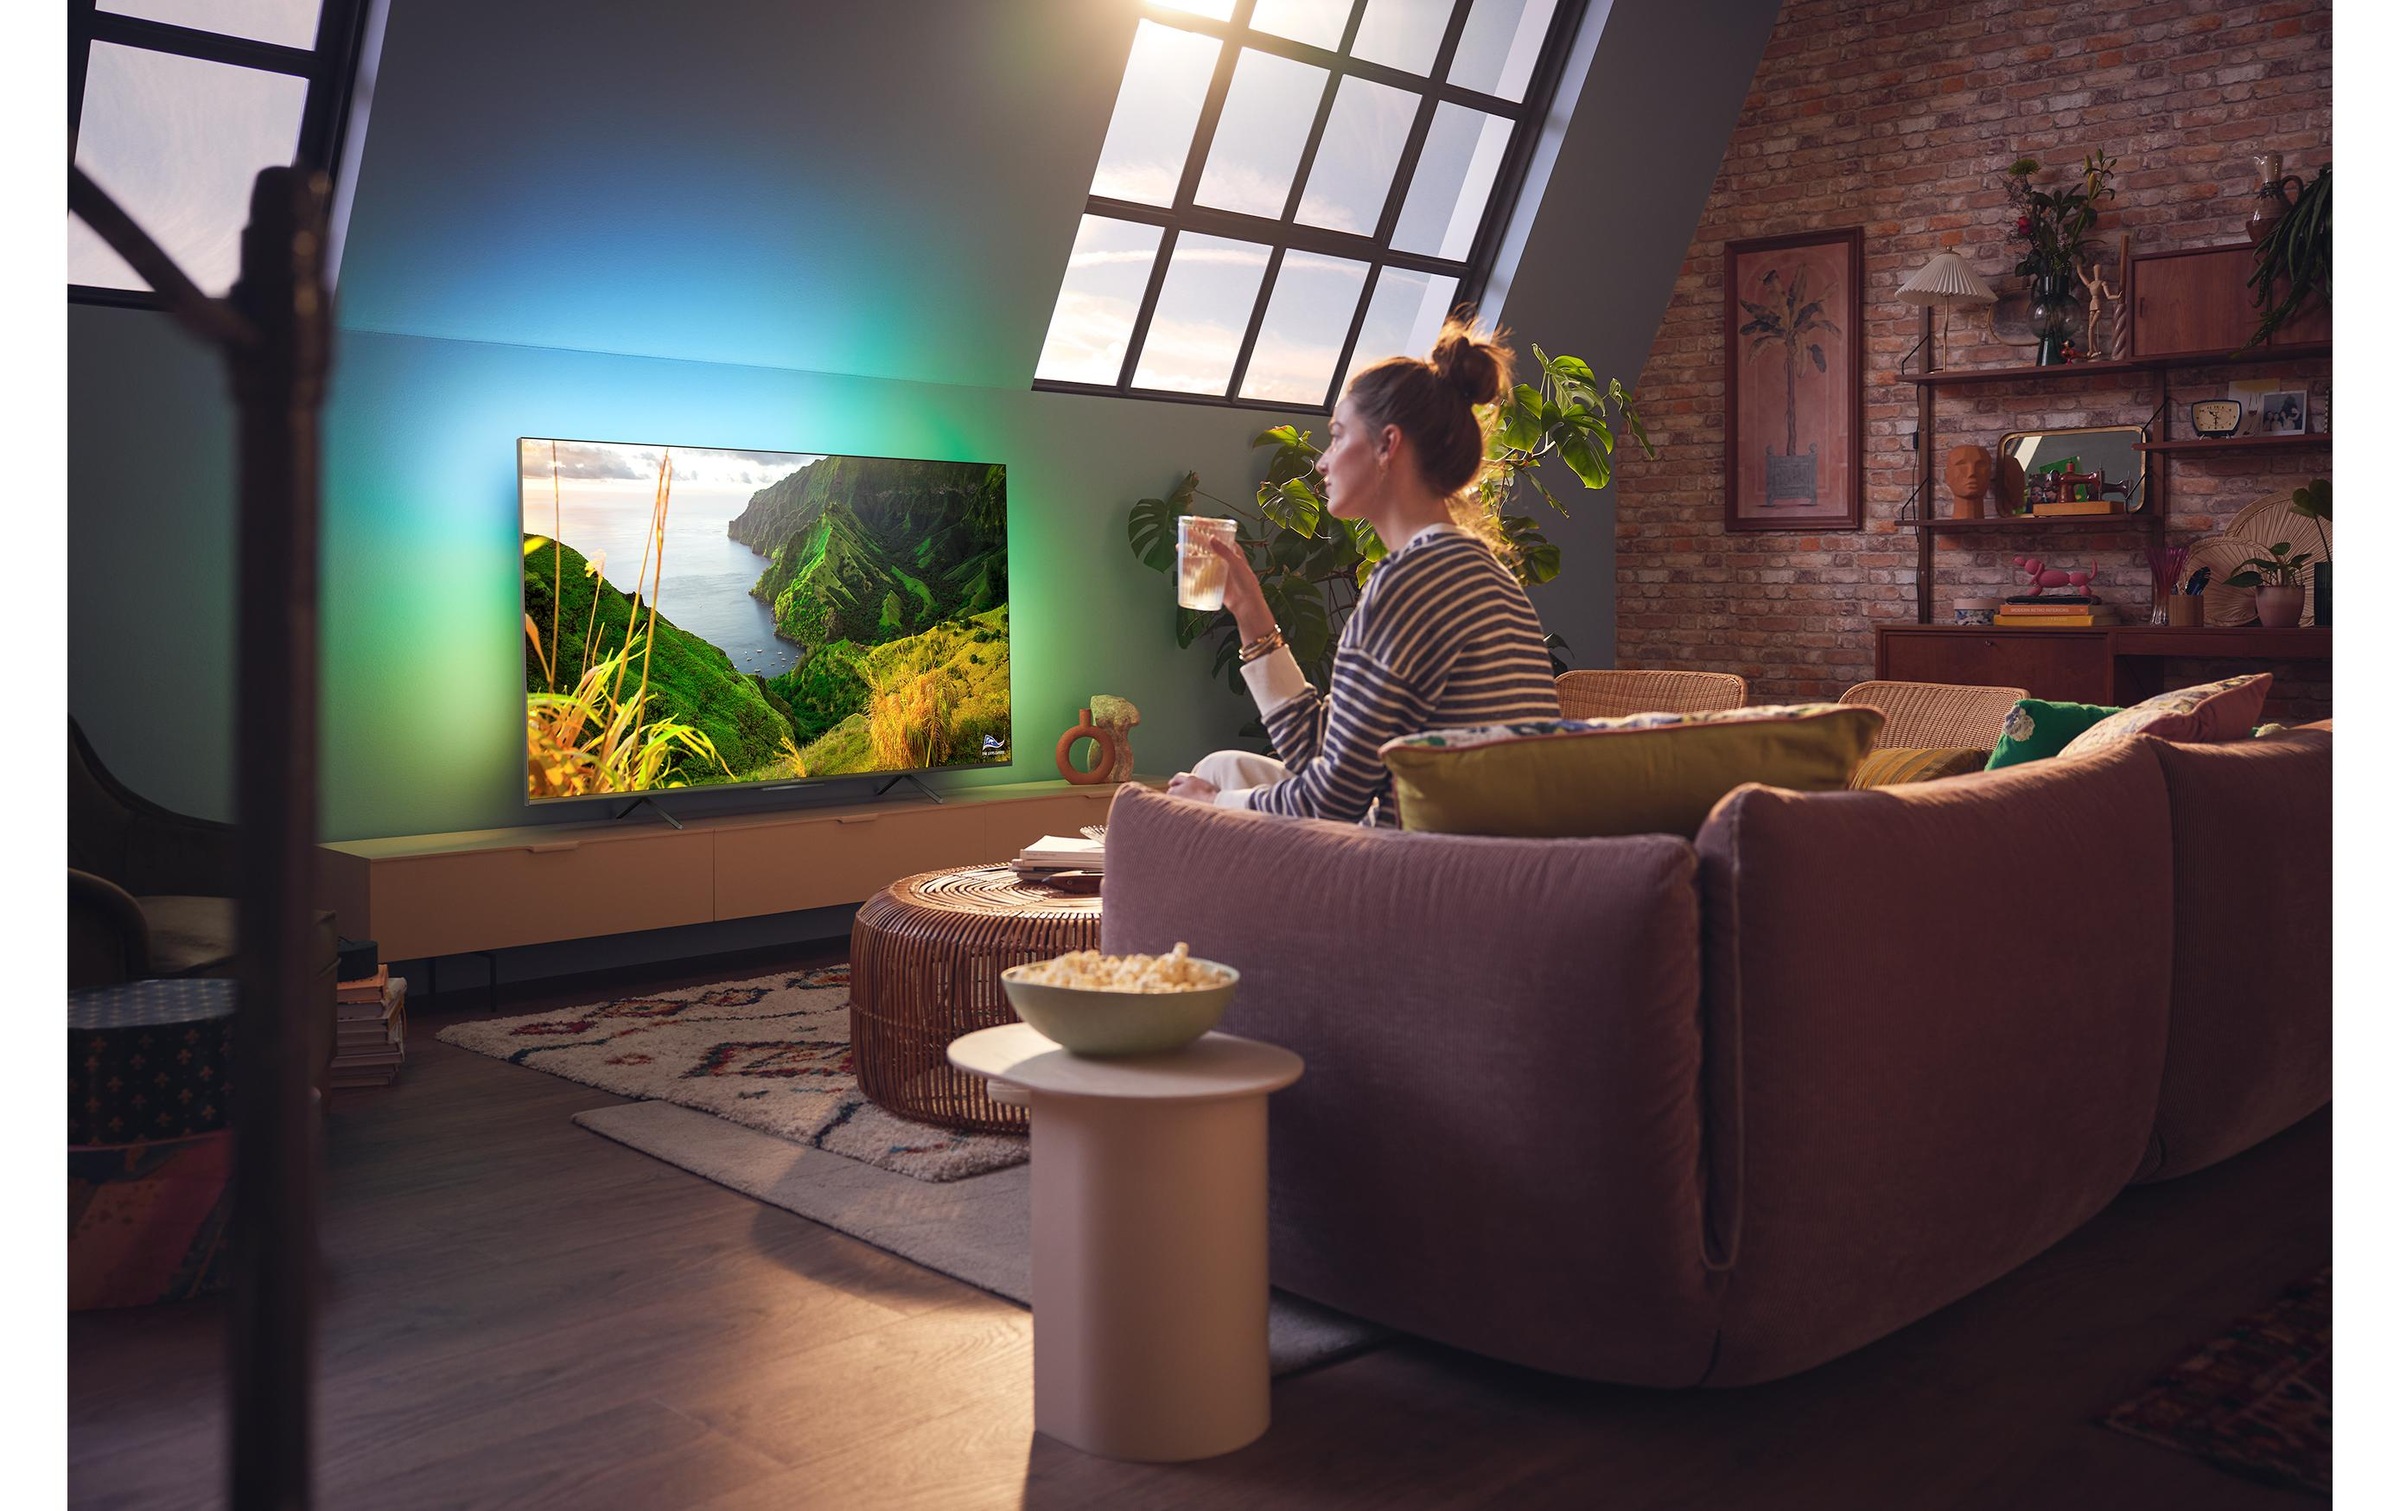 Philips LED-Fernseher, 164,45 cm/65 Zoll, 4K Ultra HD